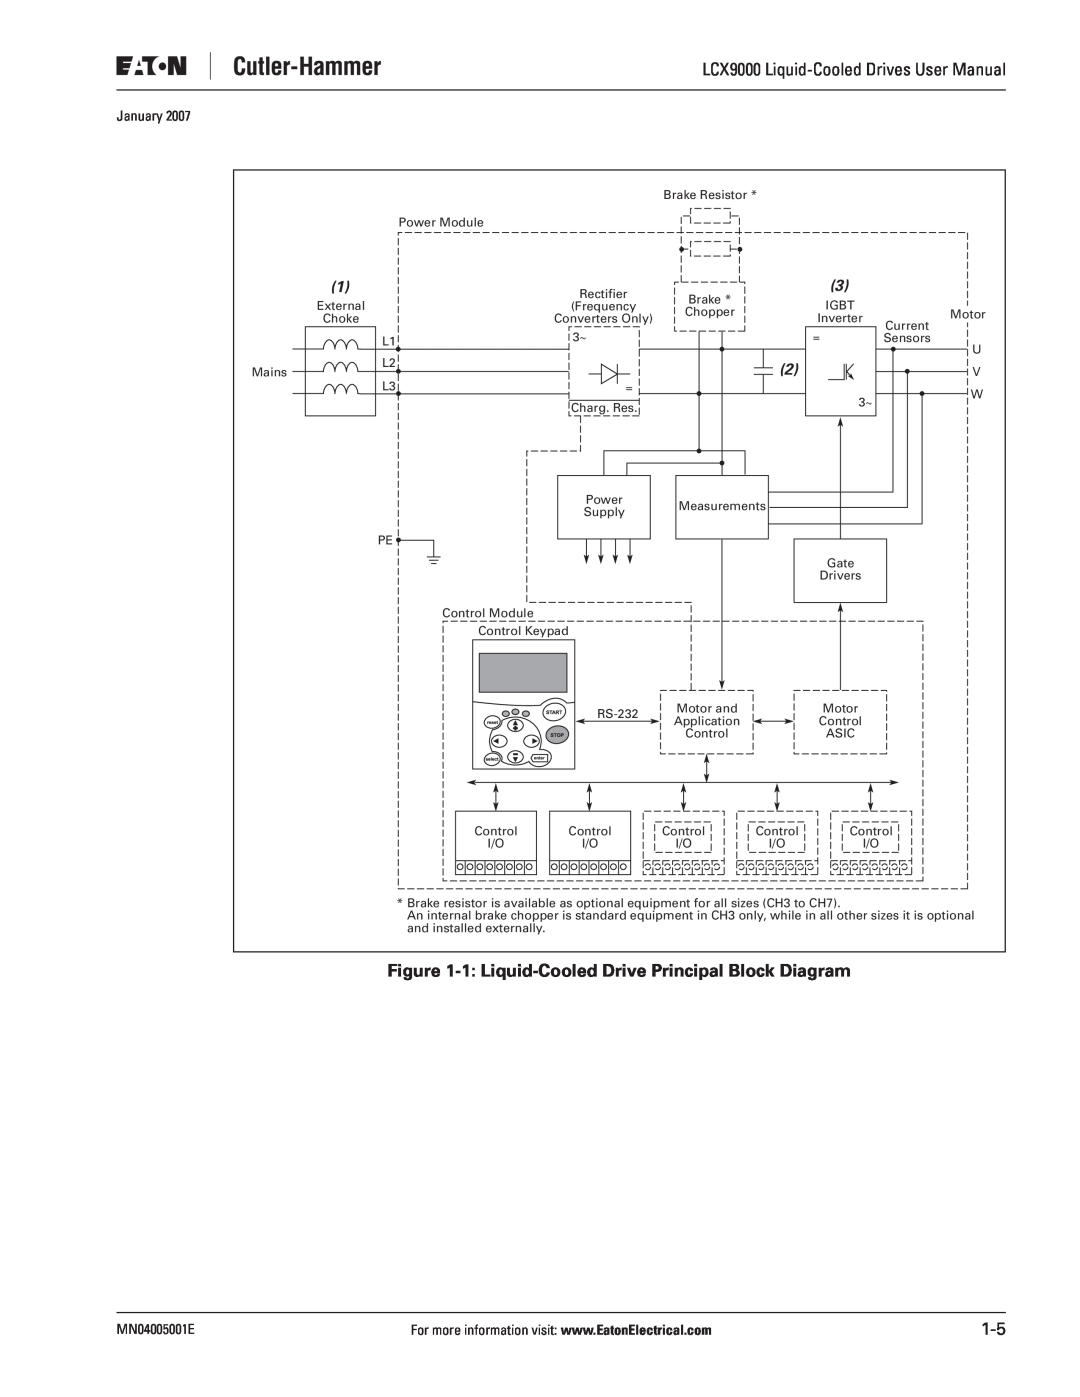 J. T. Eaton user manual 1 Liquid-Cooled Drive Principal Block Diagram, LCX9000 Liquid-Cooled Drives User Manual, January 